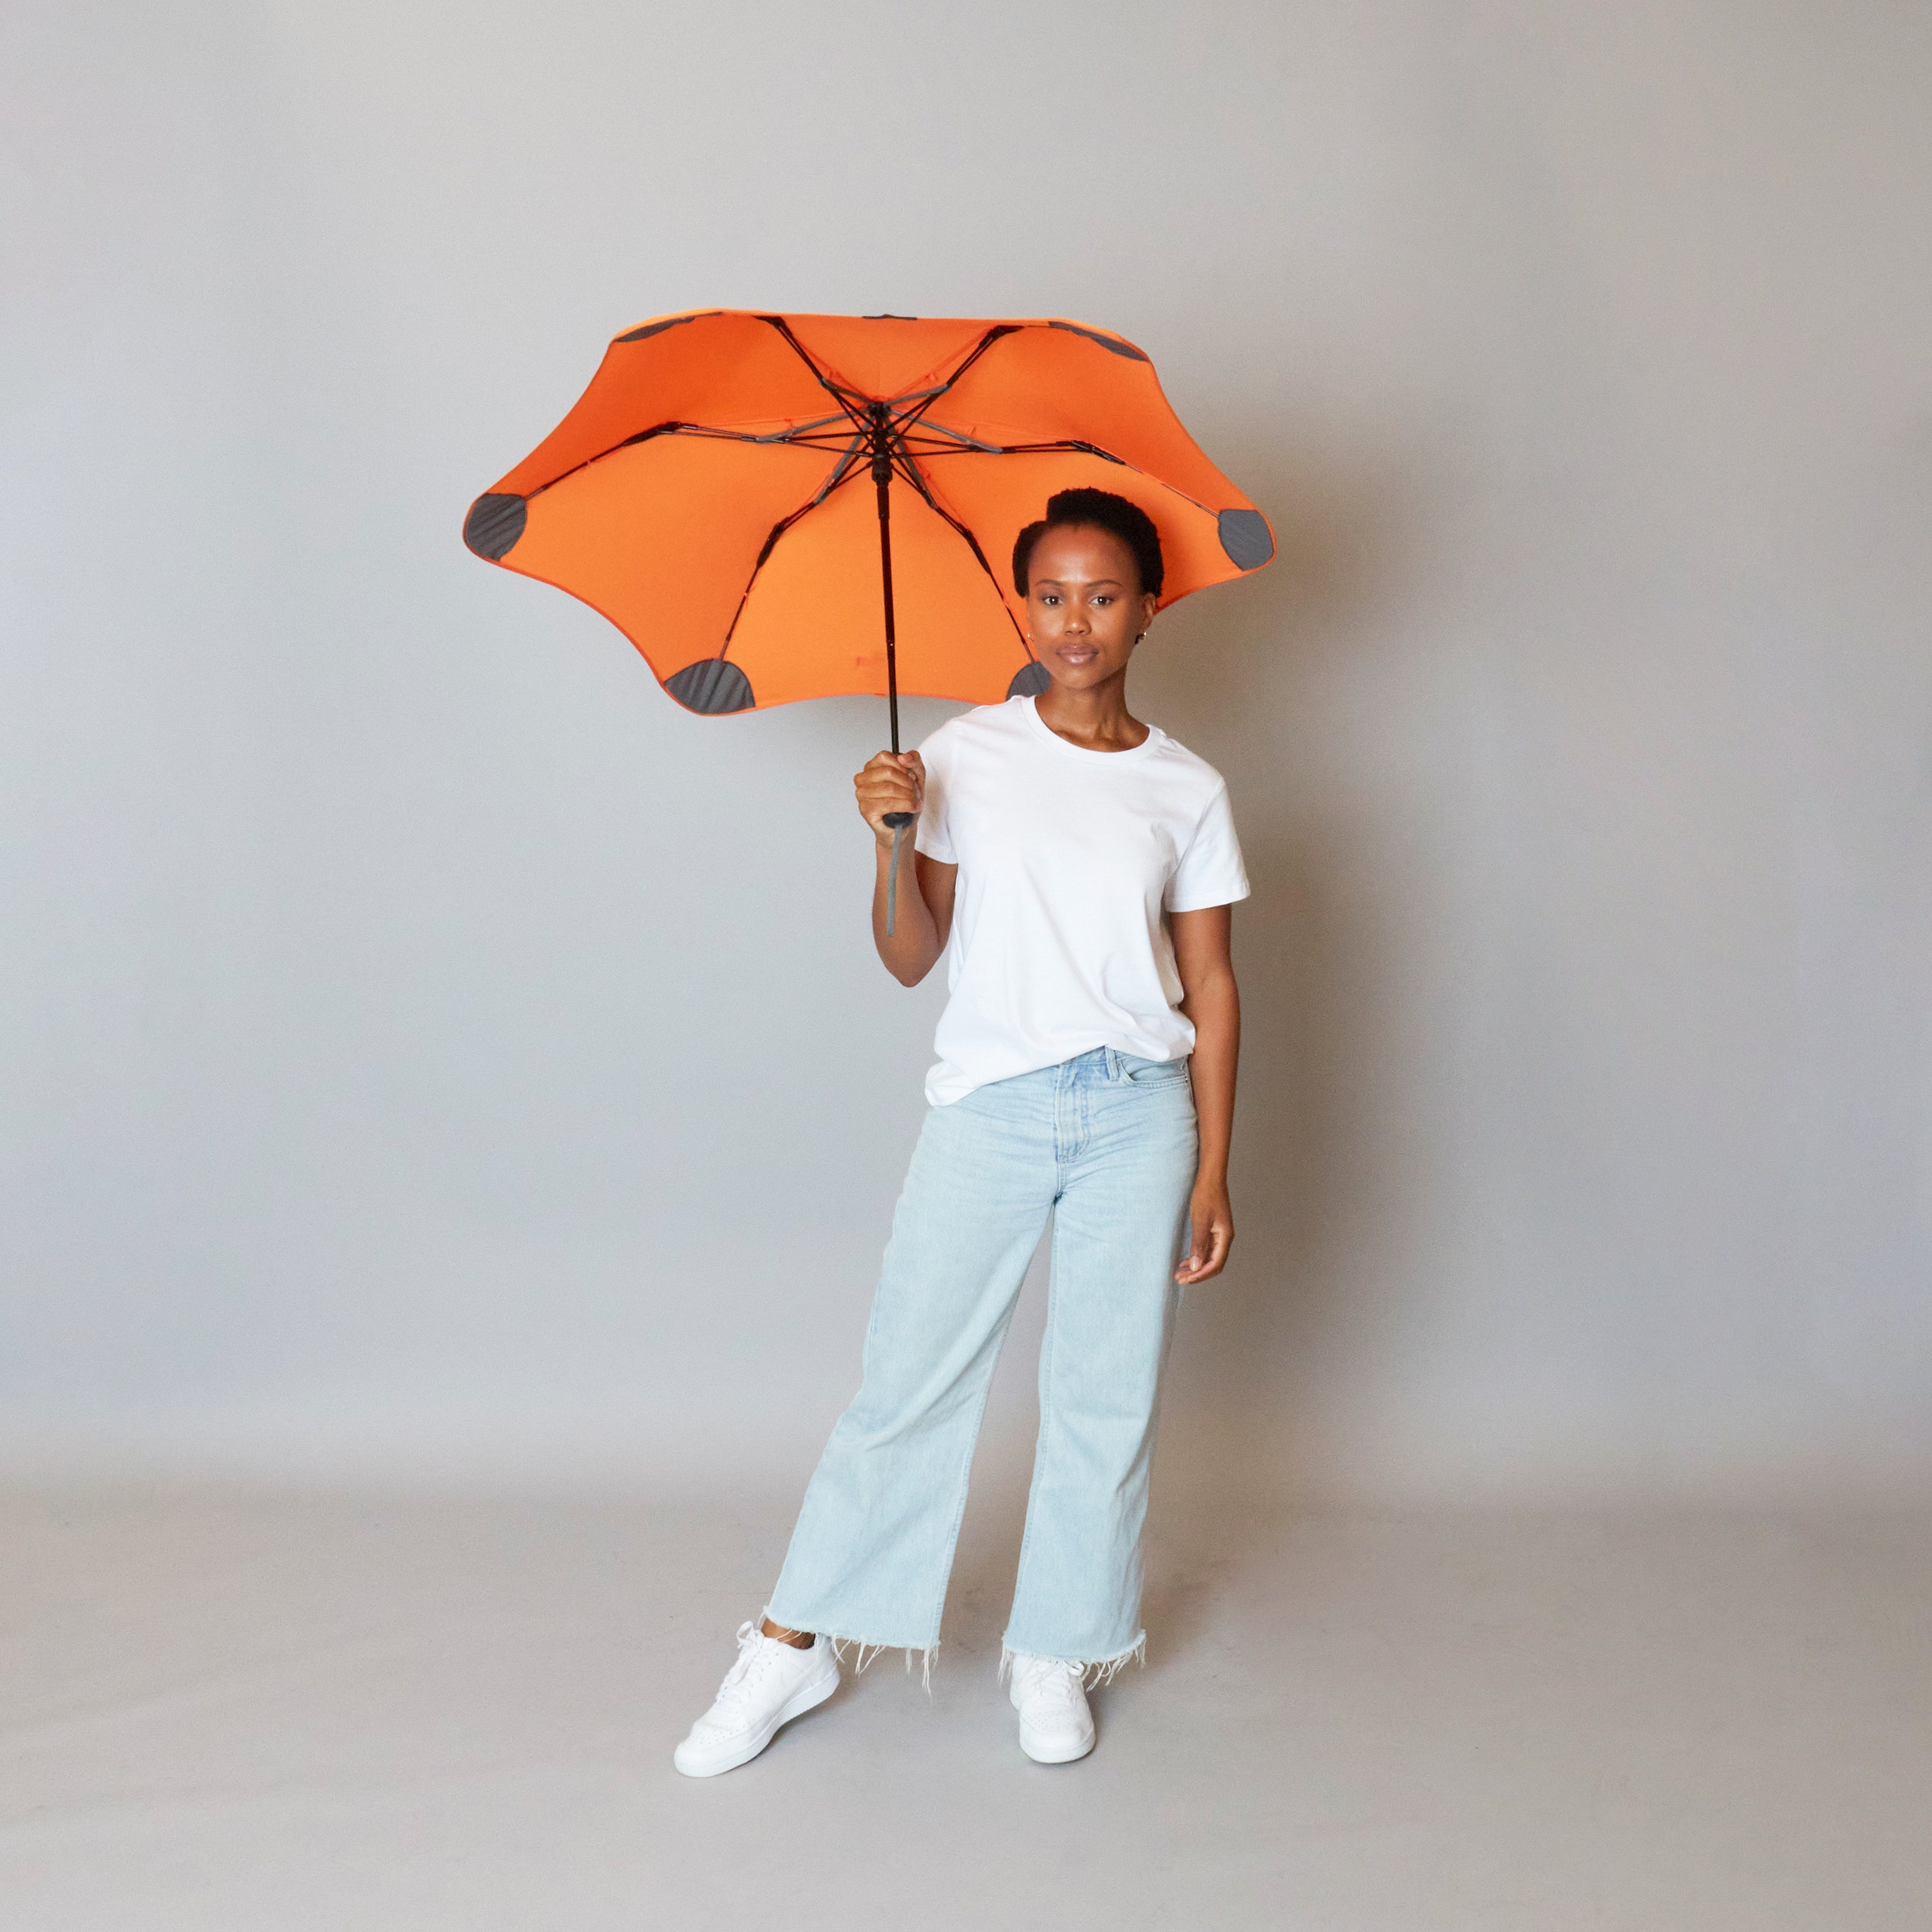 2020 Metro Orange Blunt Umbrella Model Front View